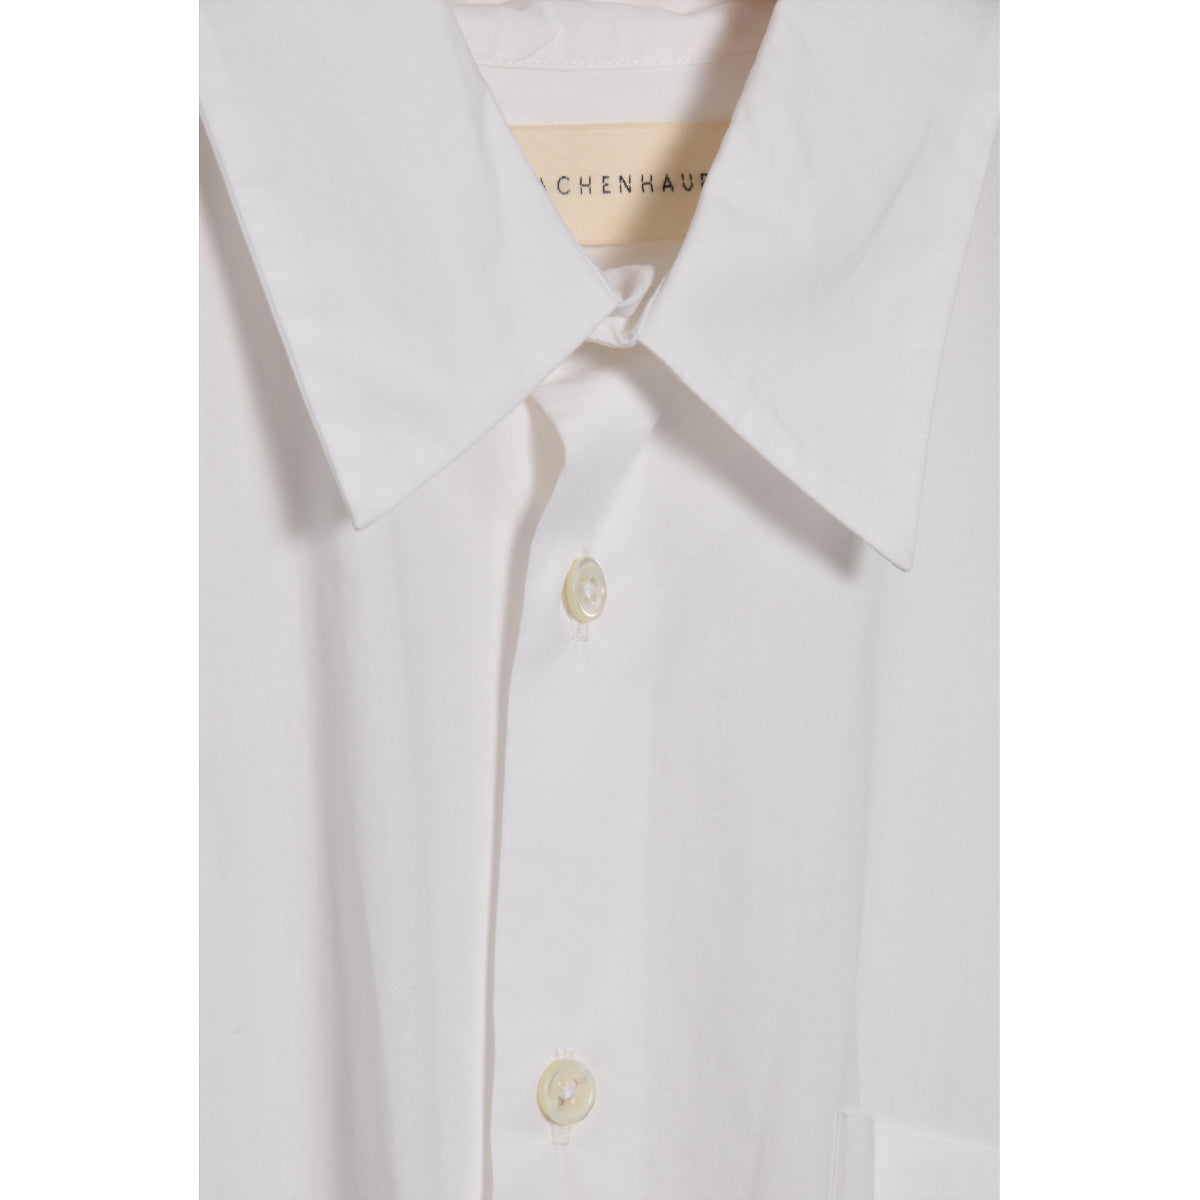 Jan Machenhauer Christopher Oversize Shirt poplin/white